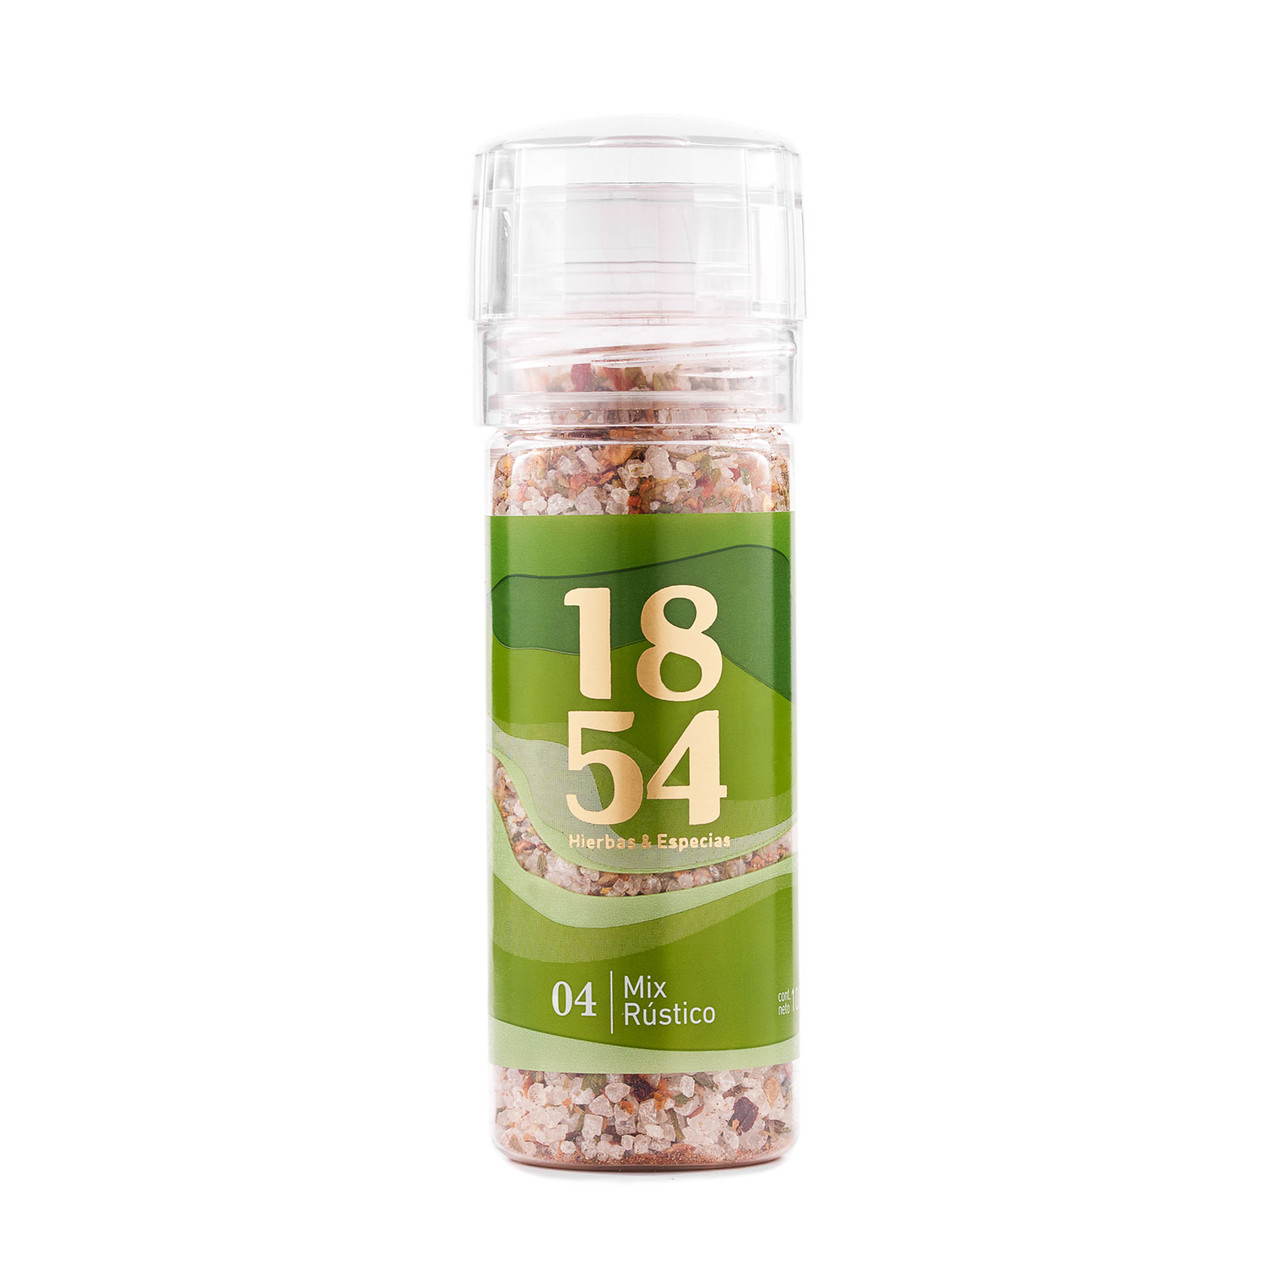 Molinillo Premium 1854 Hierbas & Especias Mix Rústico Salt, Spices &  Dehydrated Vegetables Grinder, 100 g / 3.52 oz